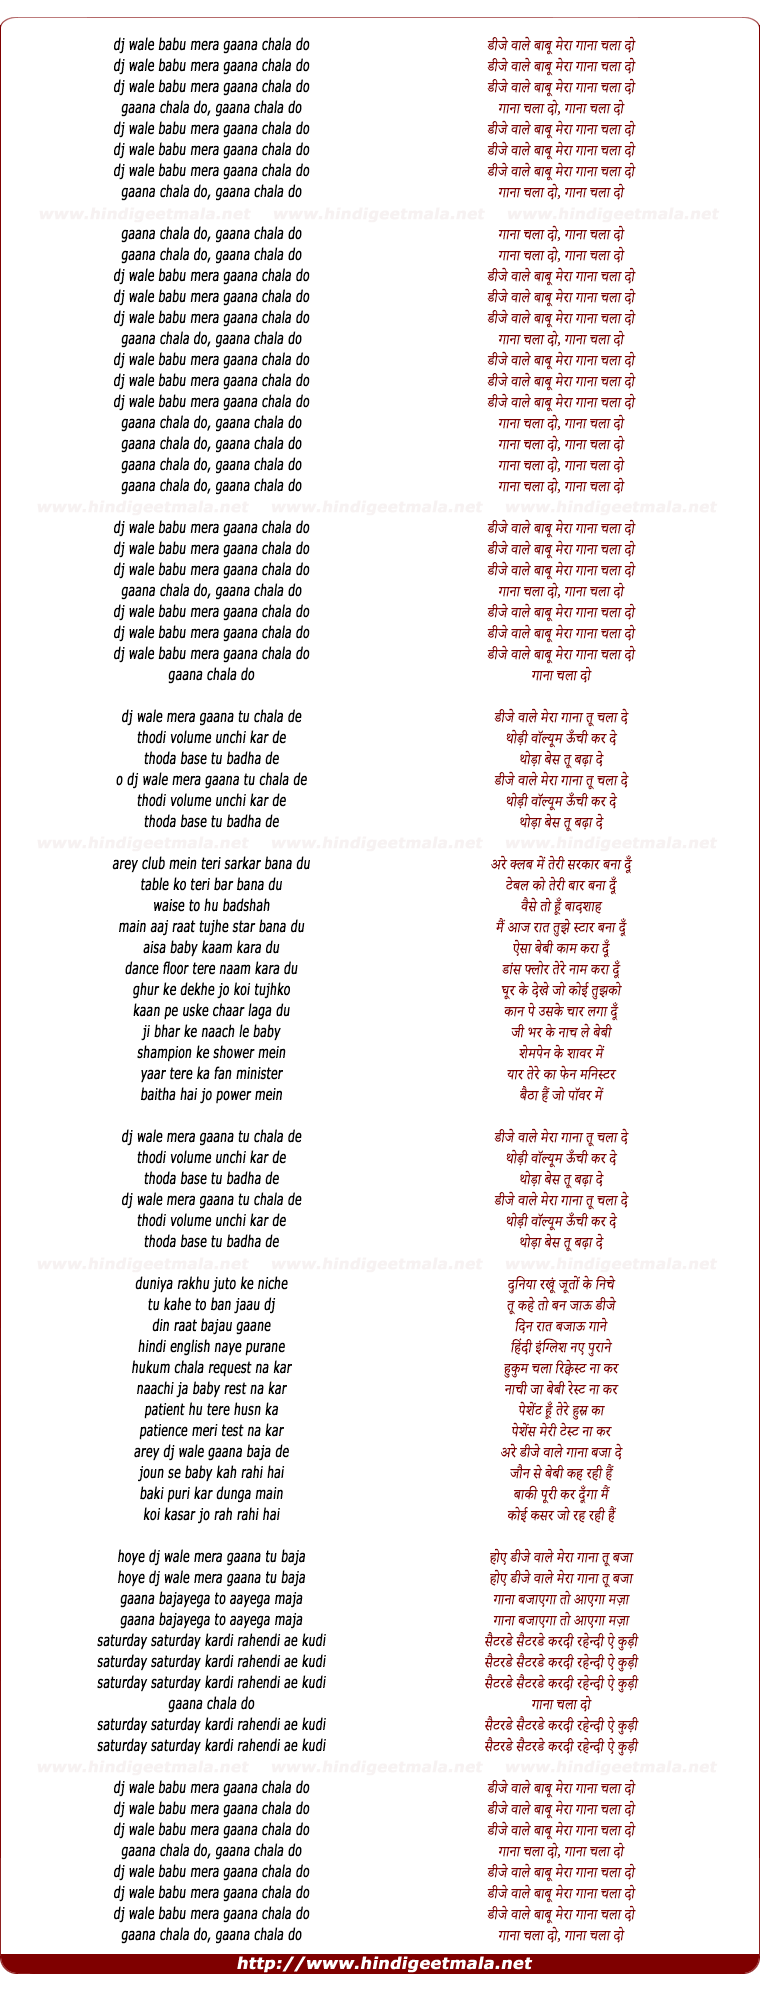 lyrics of song Dj Waley Babu